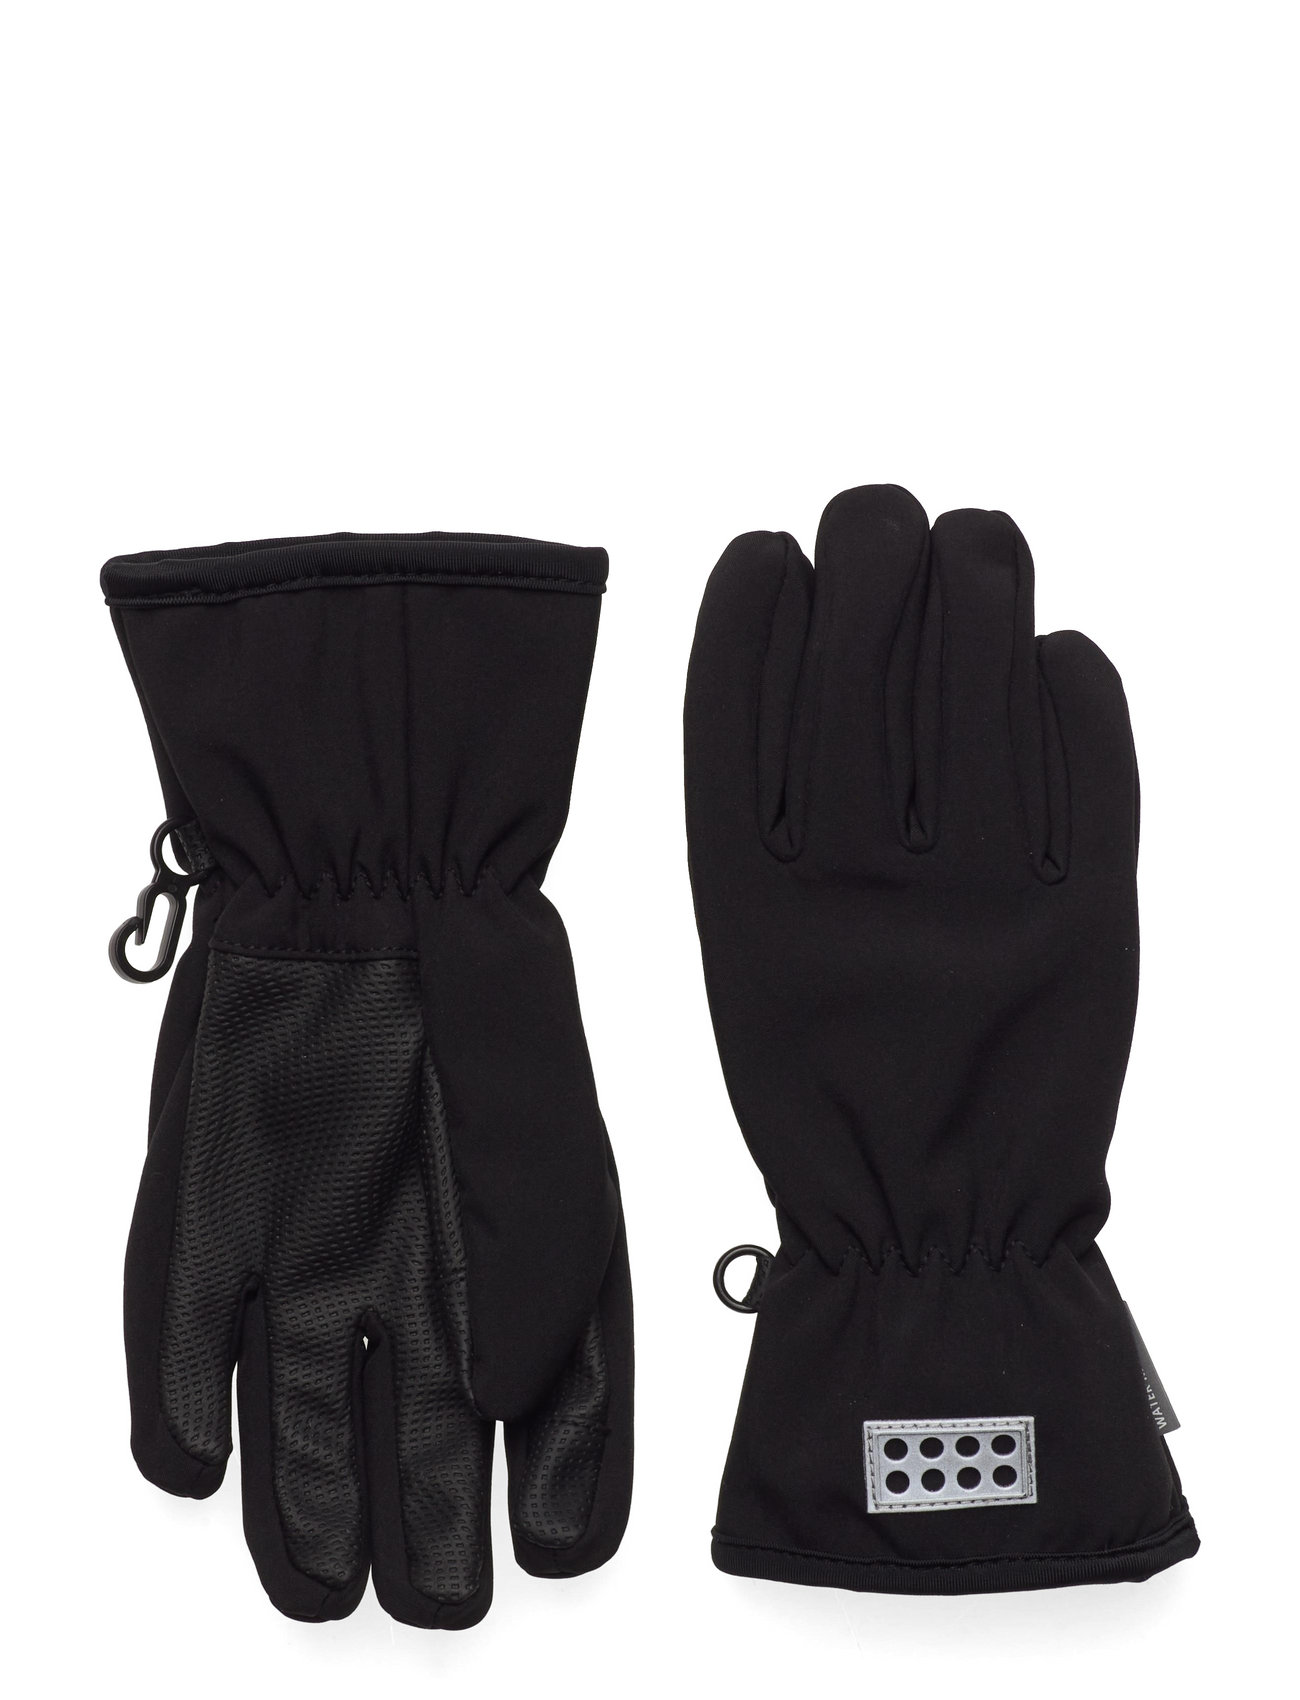 Lwatlin 705 - Softshell Glove Hanskat Käsineet Musta Lego Wear, Lego wear